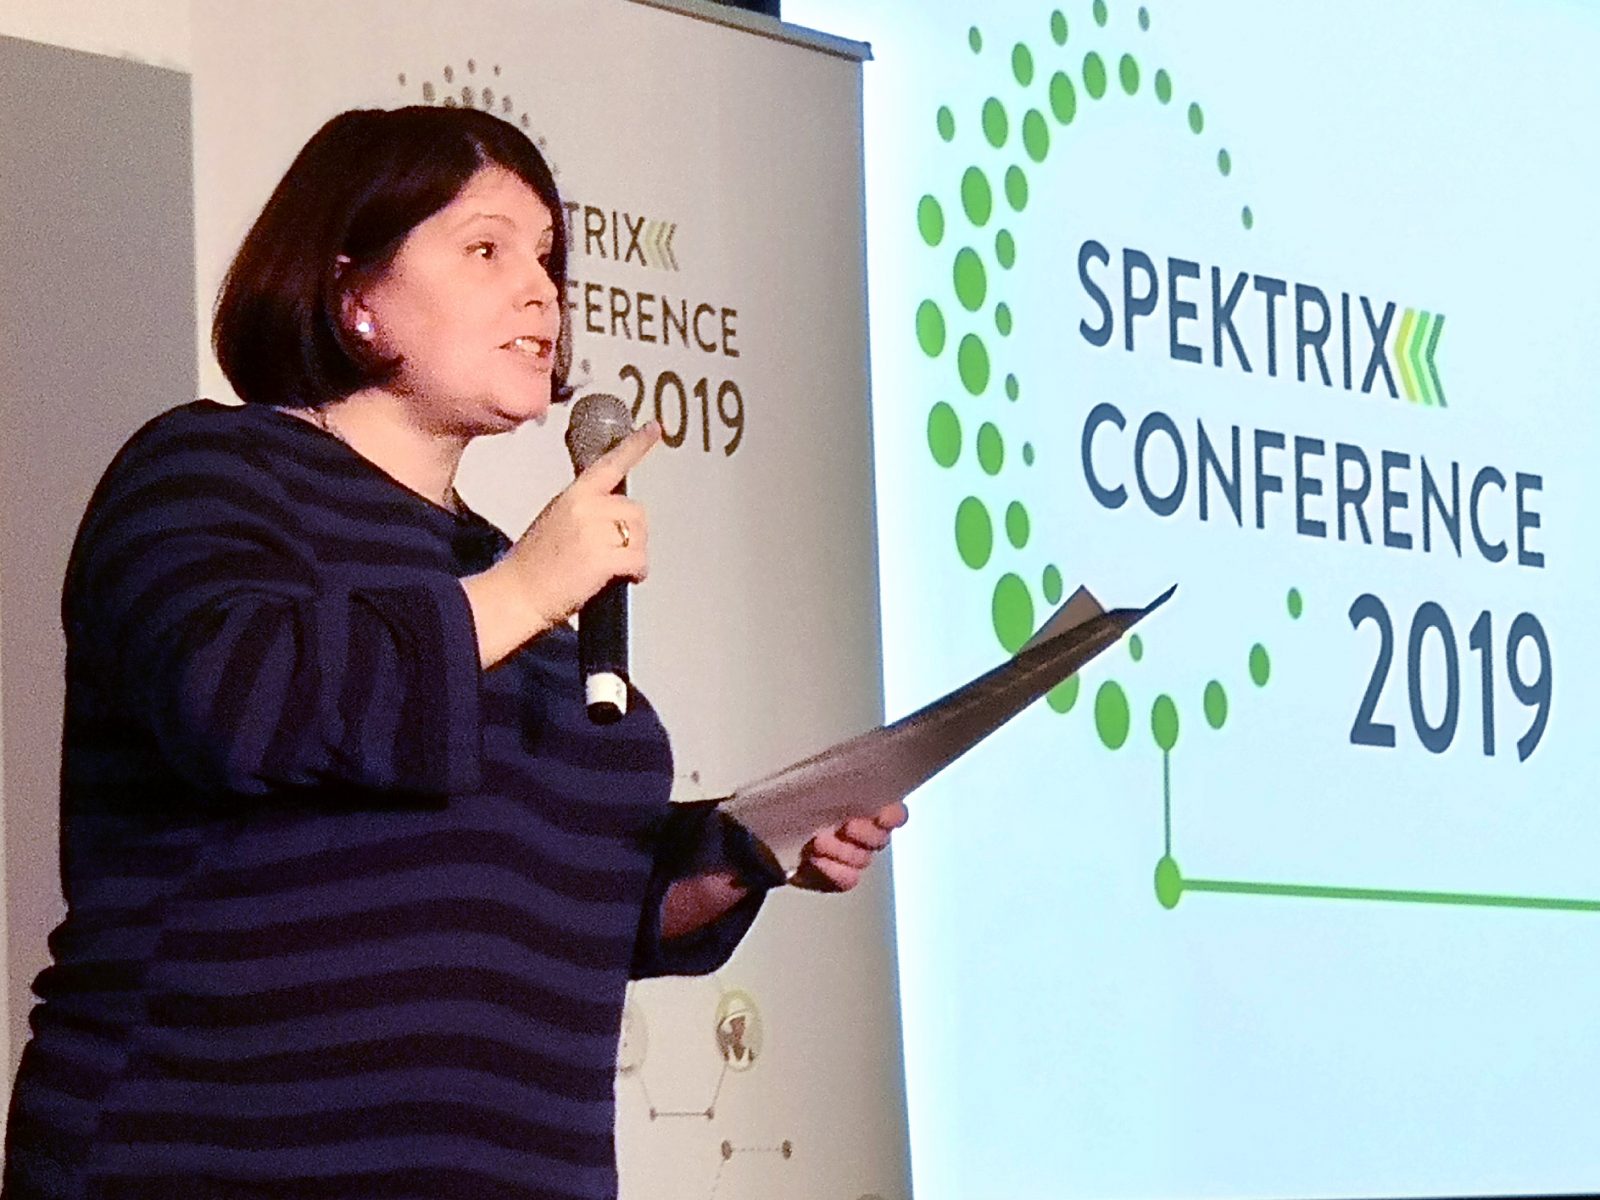 Spektrix conference 2019